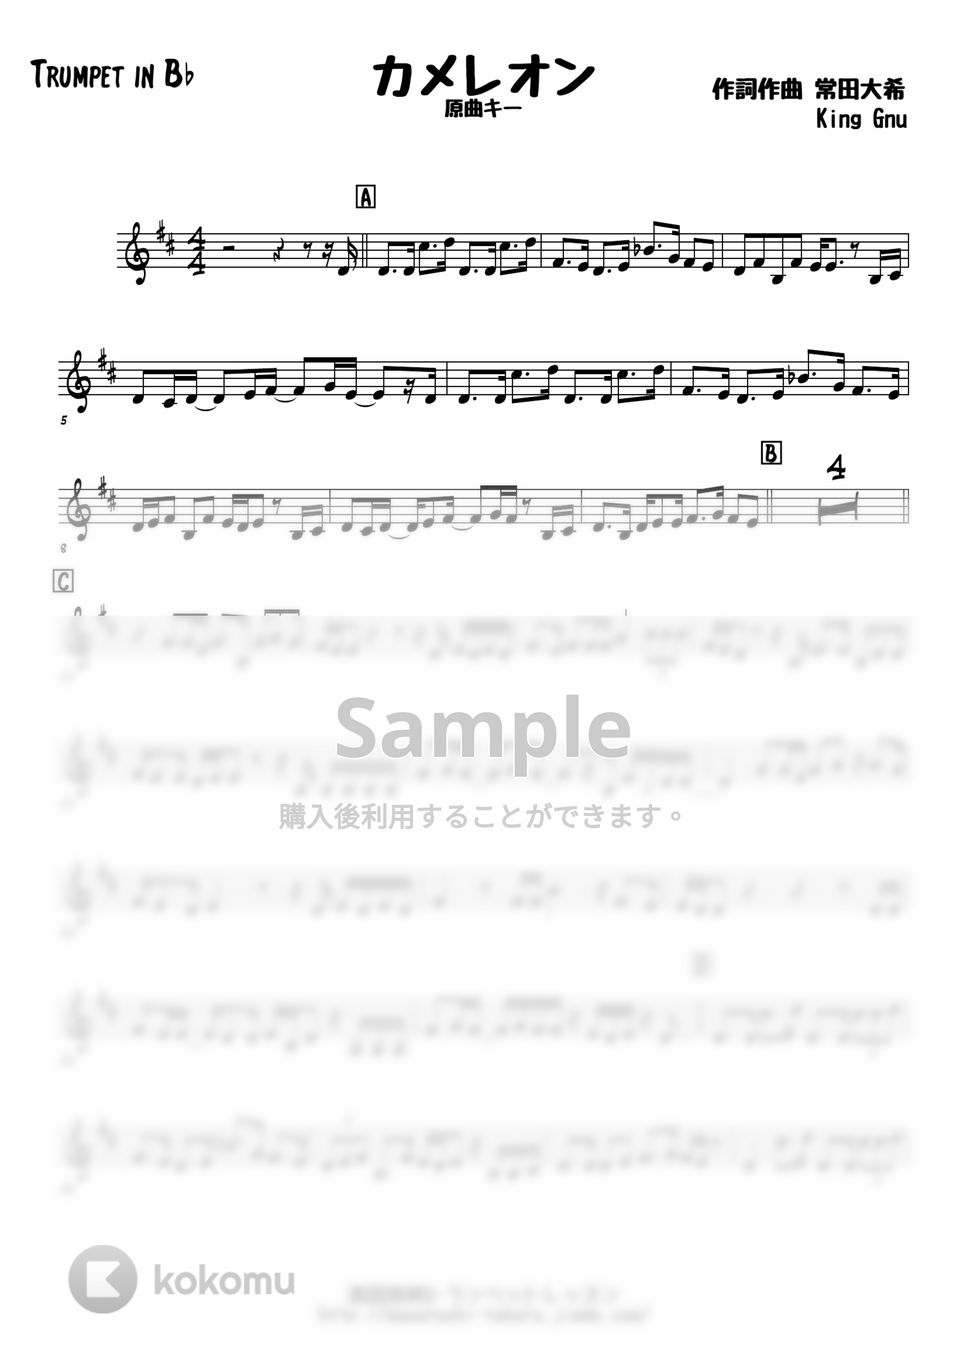 King Gnu - カメレオン (トランペットメロディー楽譜) by 高田将利